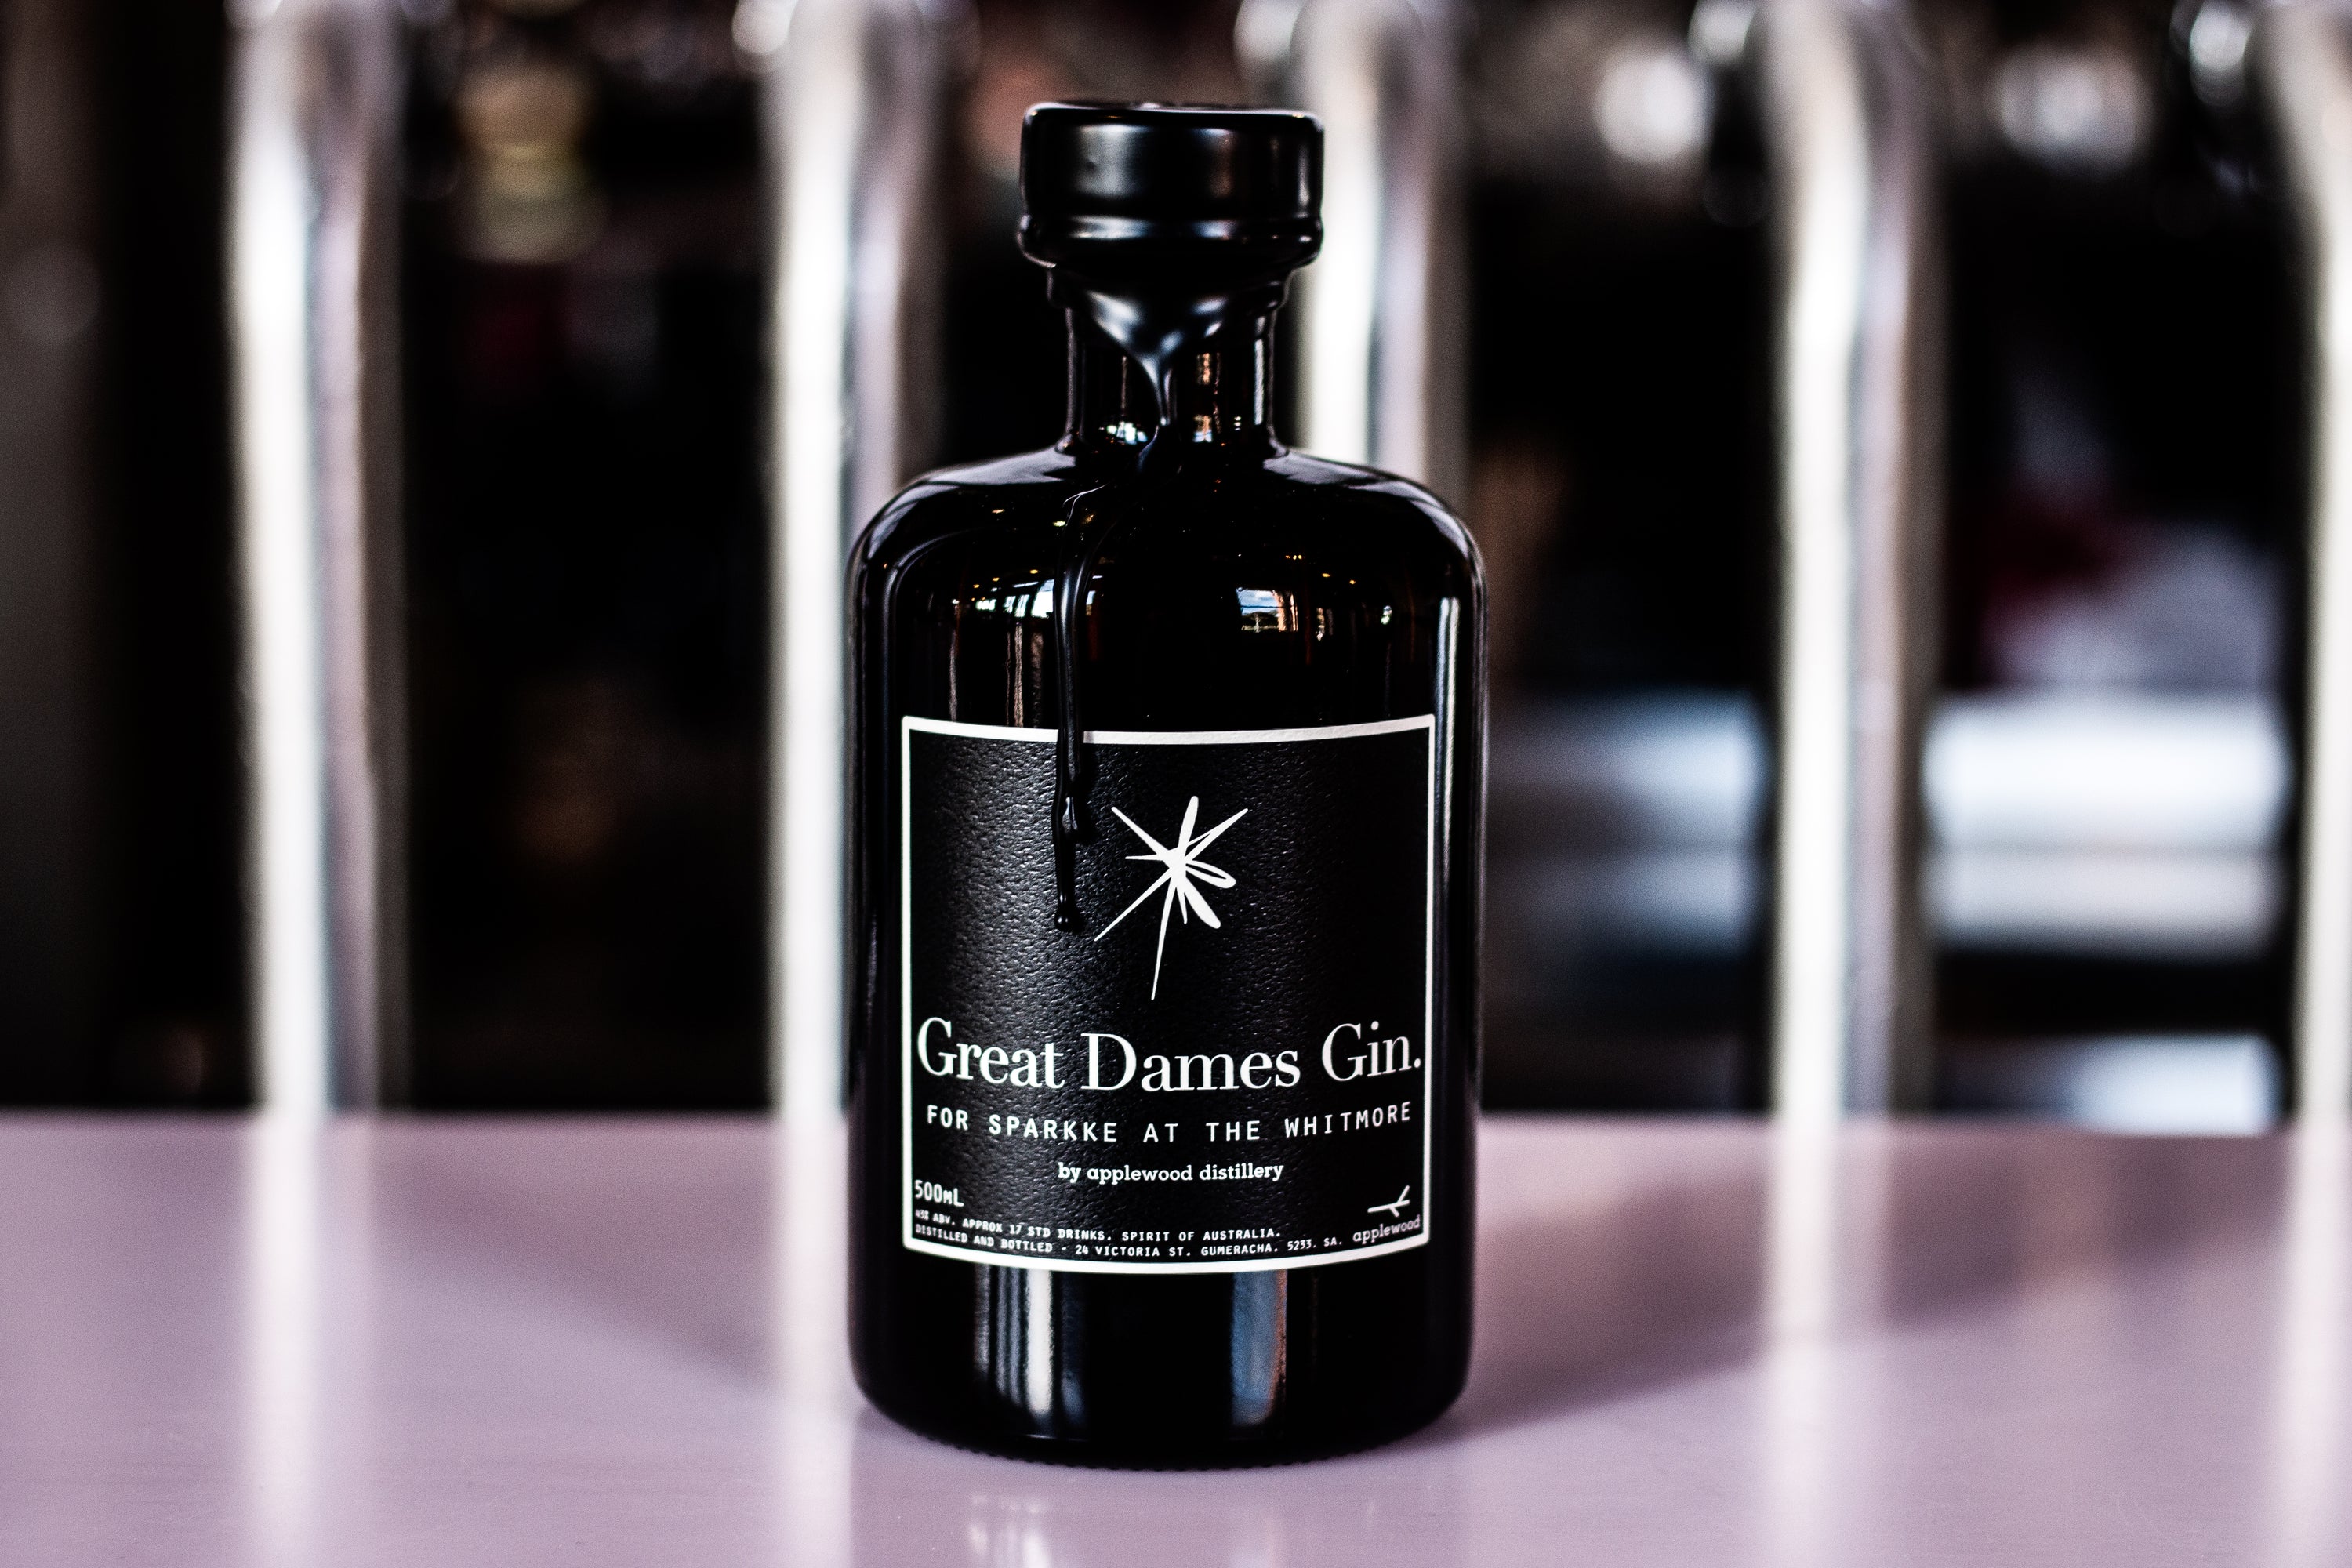 great dames gin - Applewood Distillery